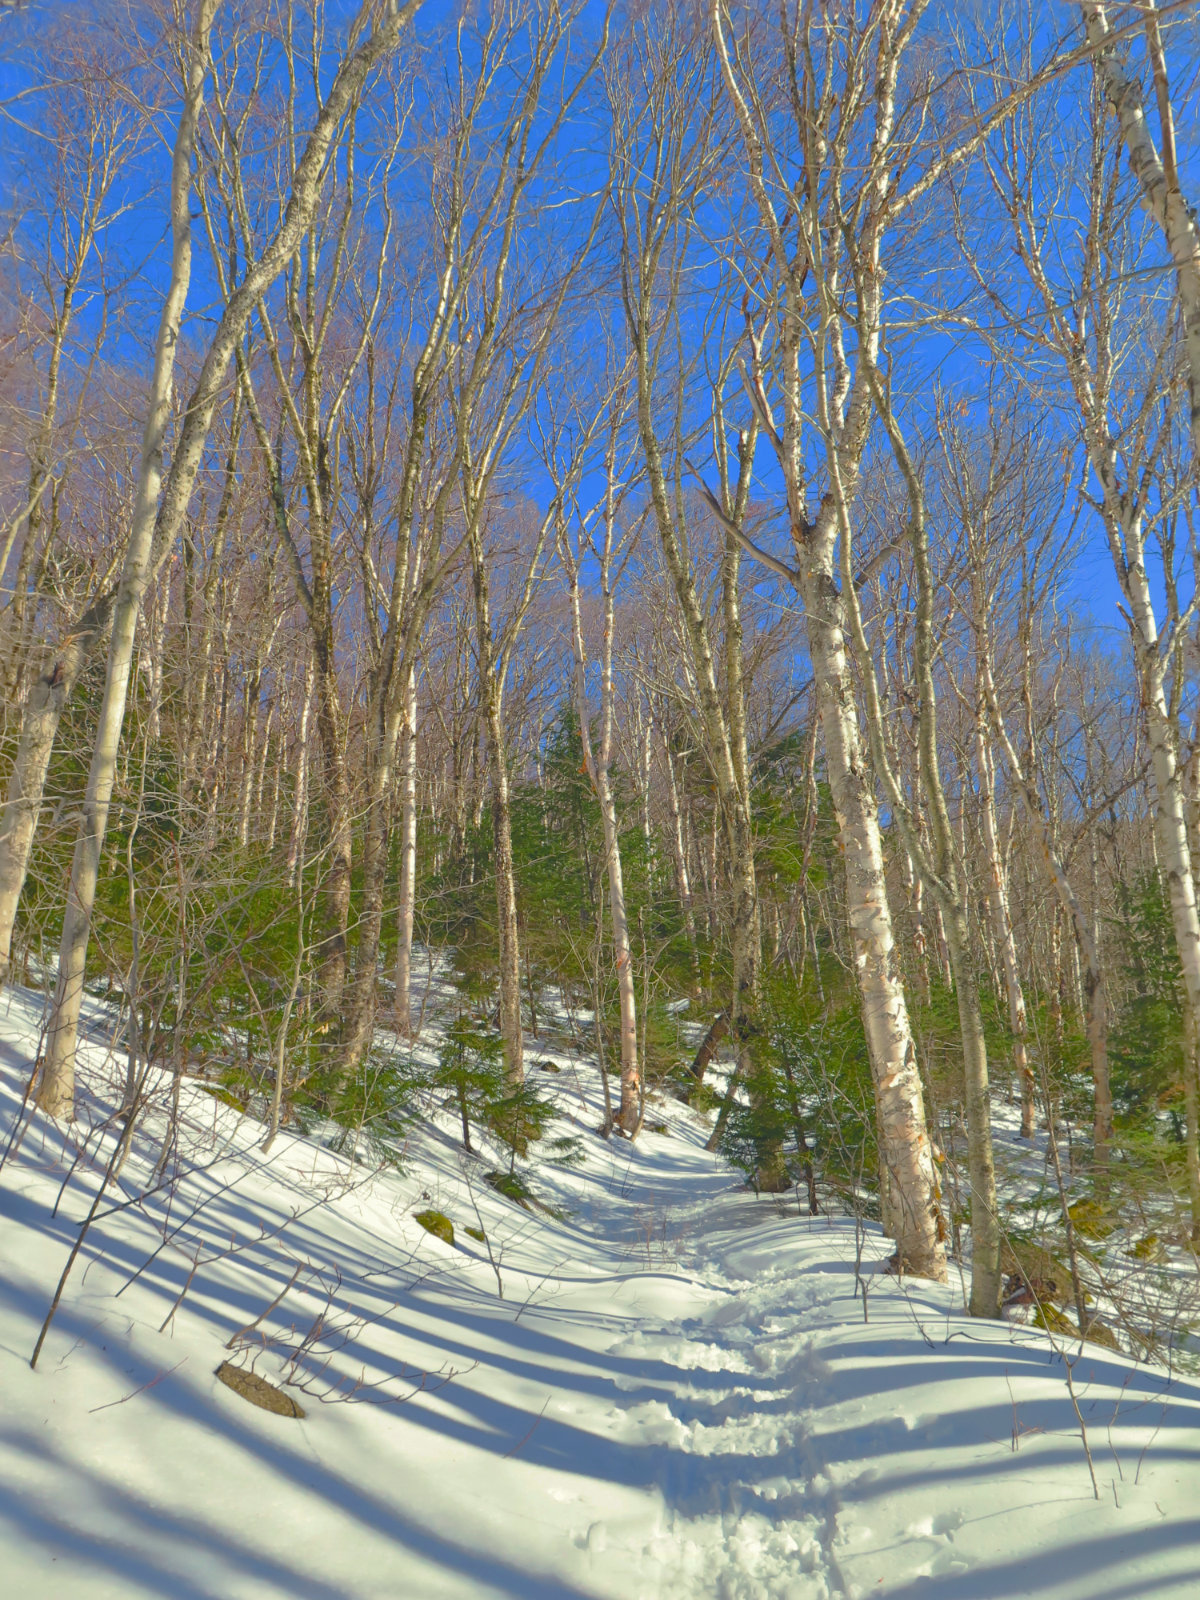 Scaur Ridge Trail with deep blue sky and trees